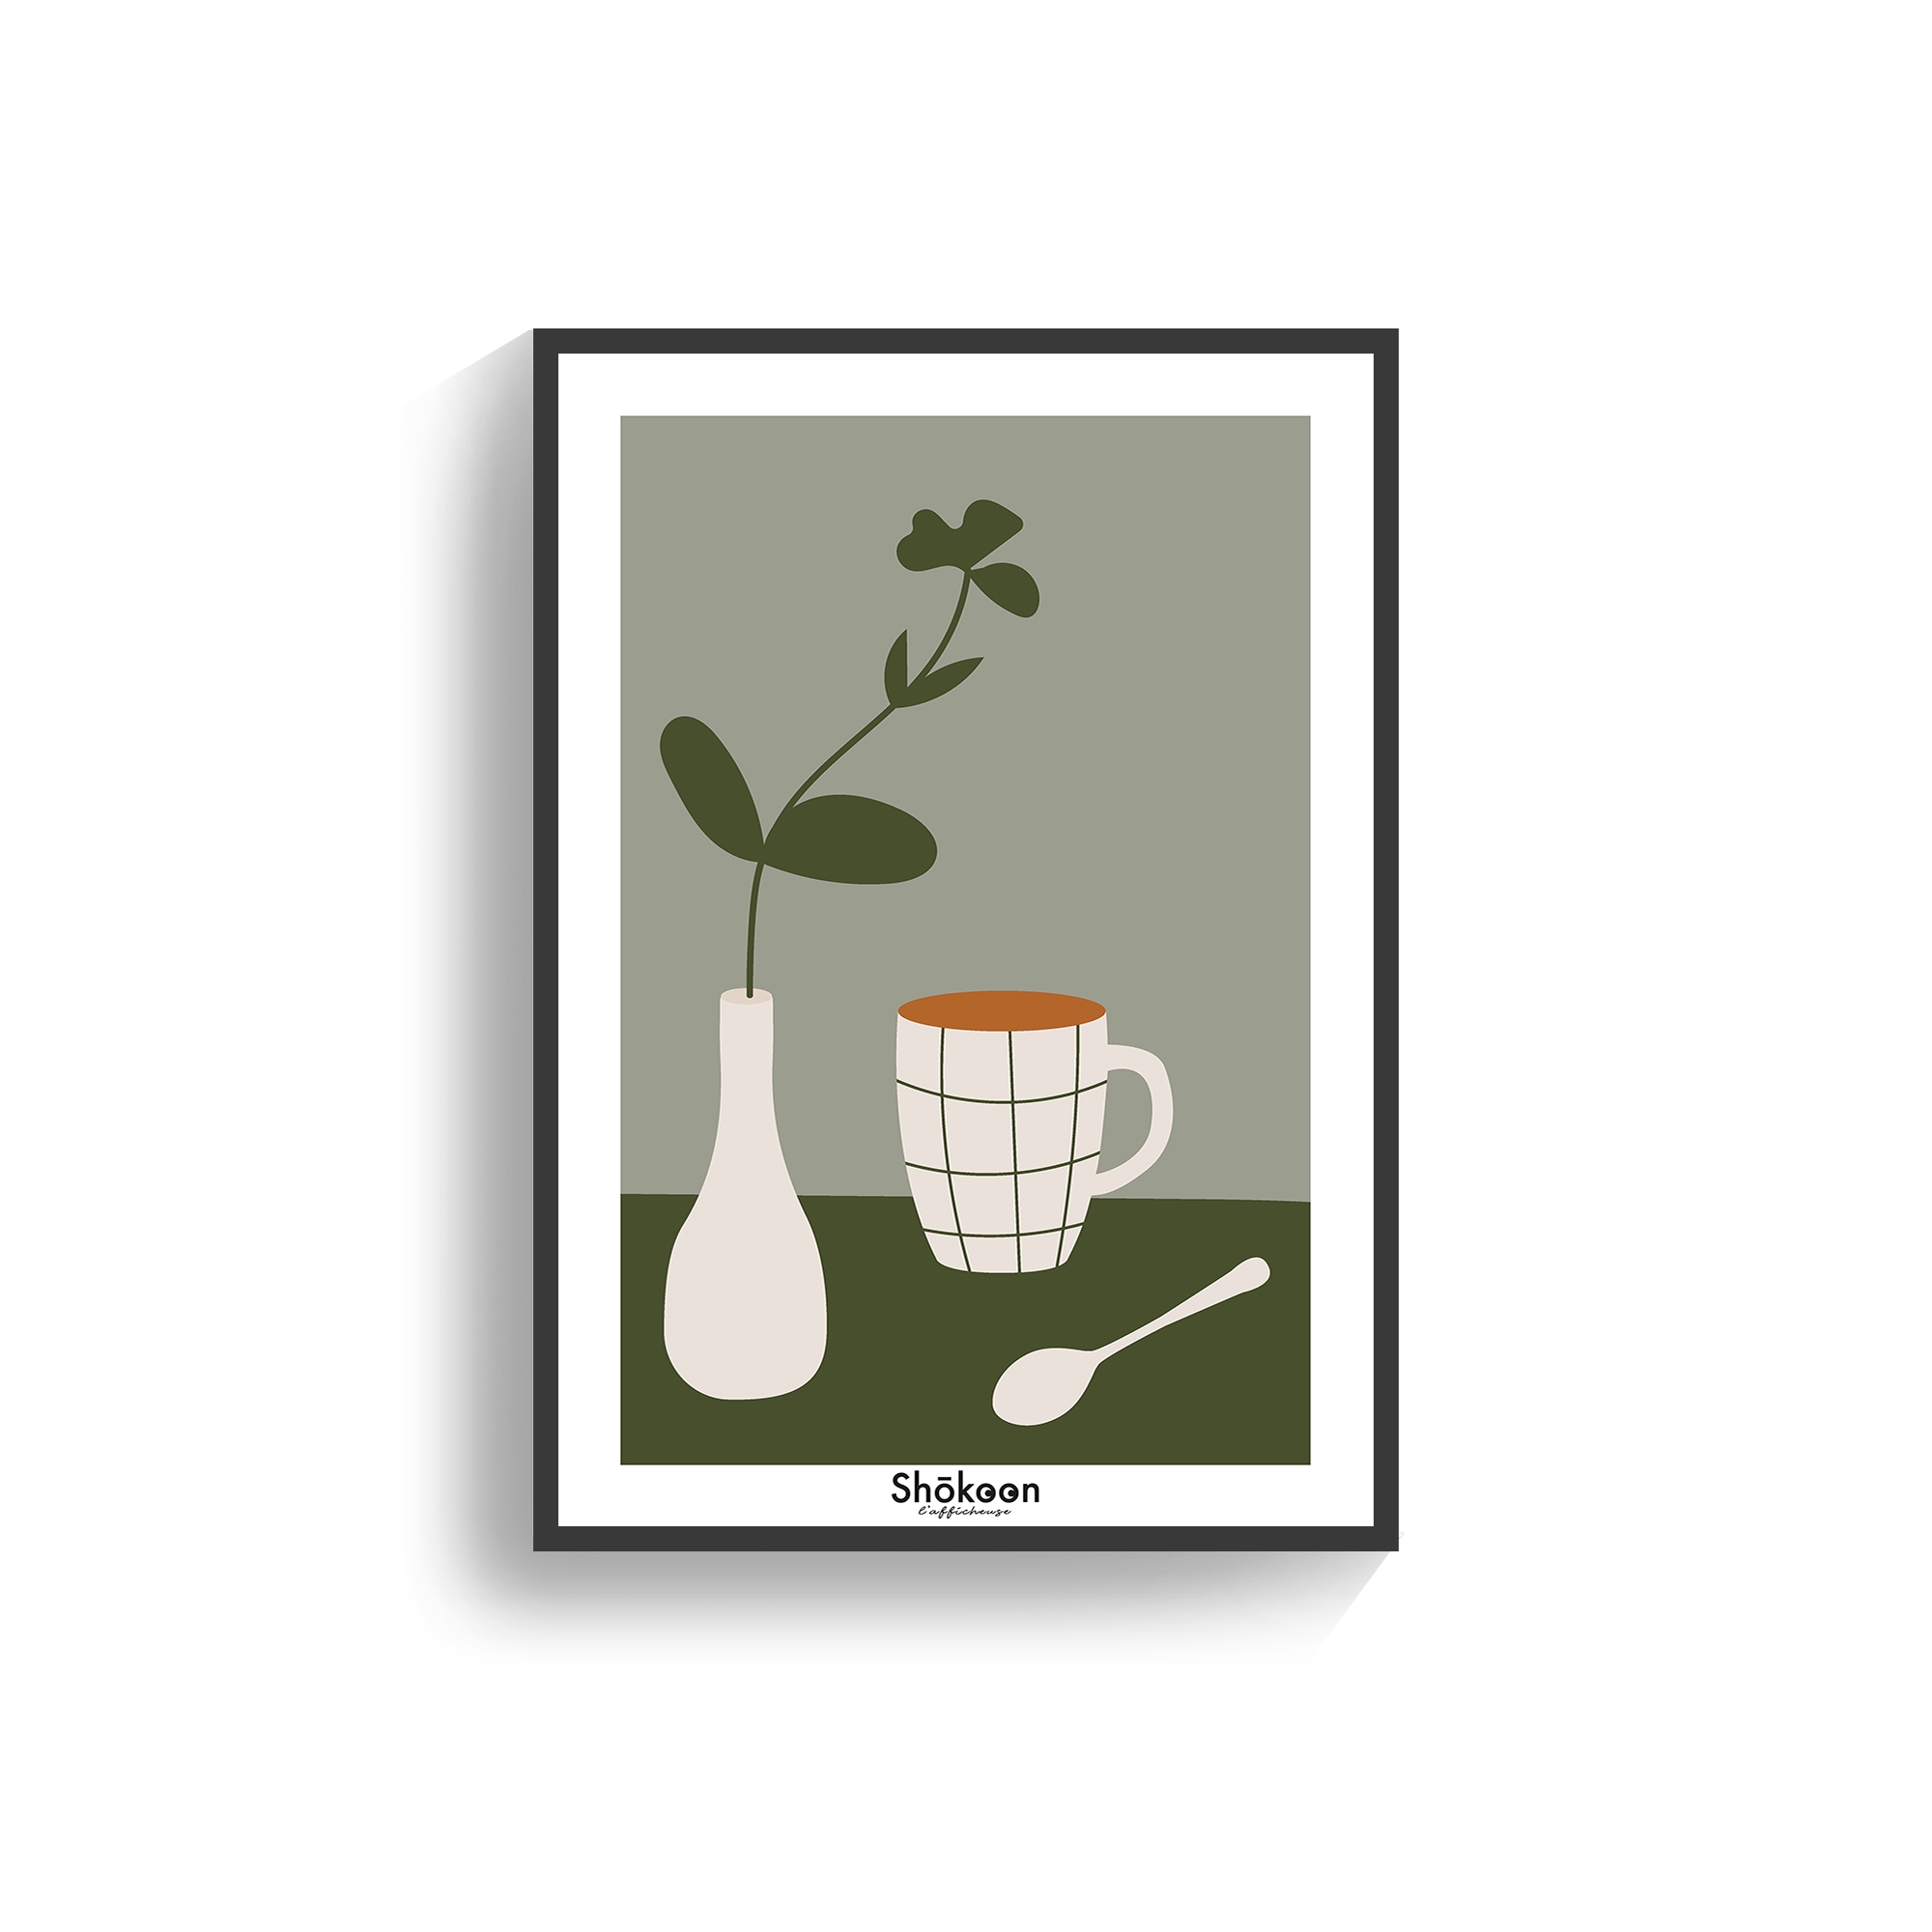 affiche-illustration-minimaliste-cuisine-mug-sur-table-shokoonlafficheuse.com